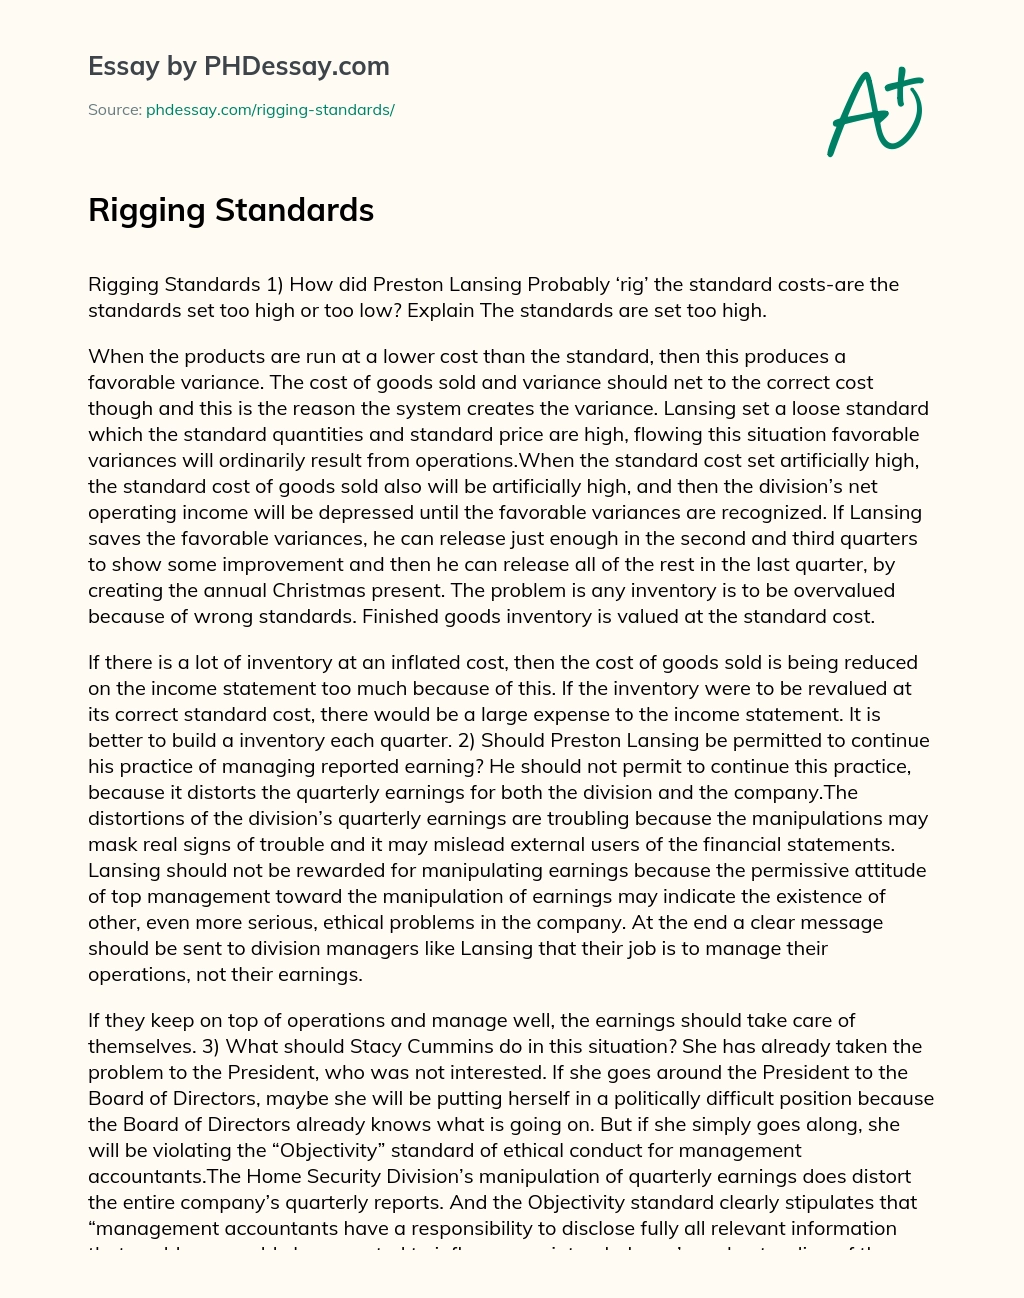 Rigging Standards essay